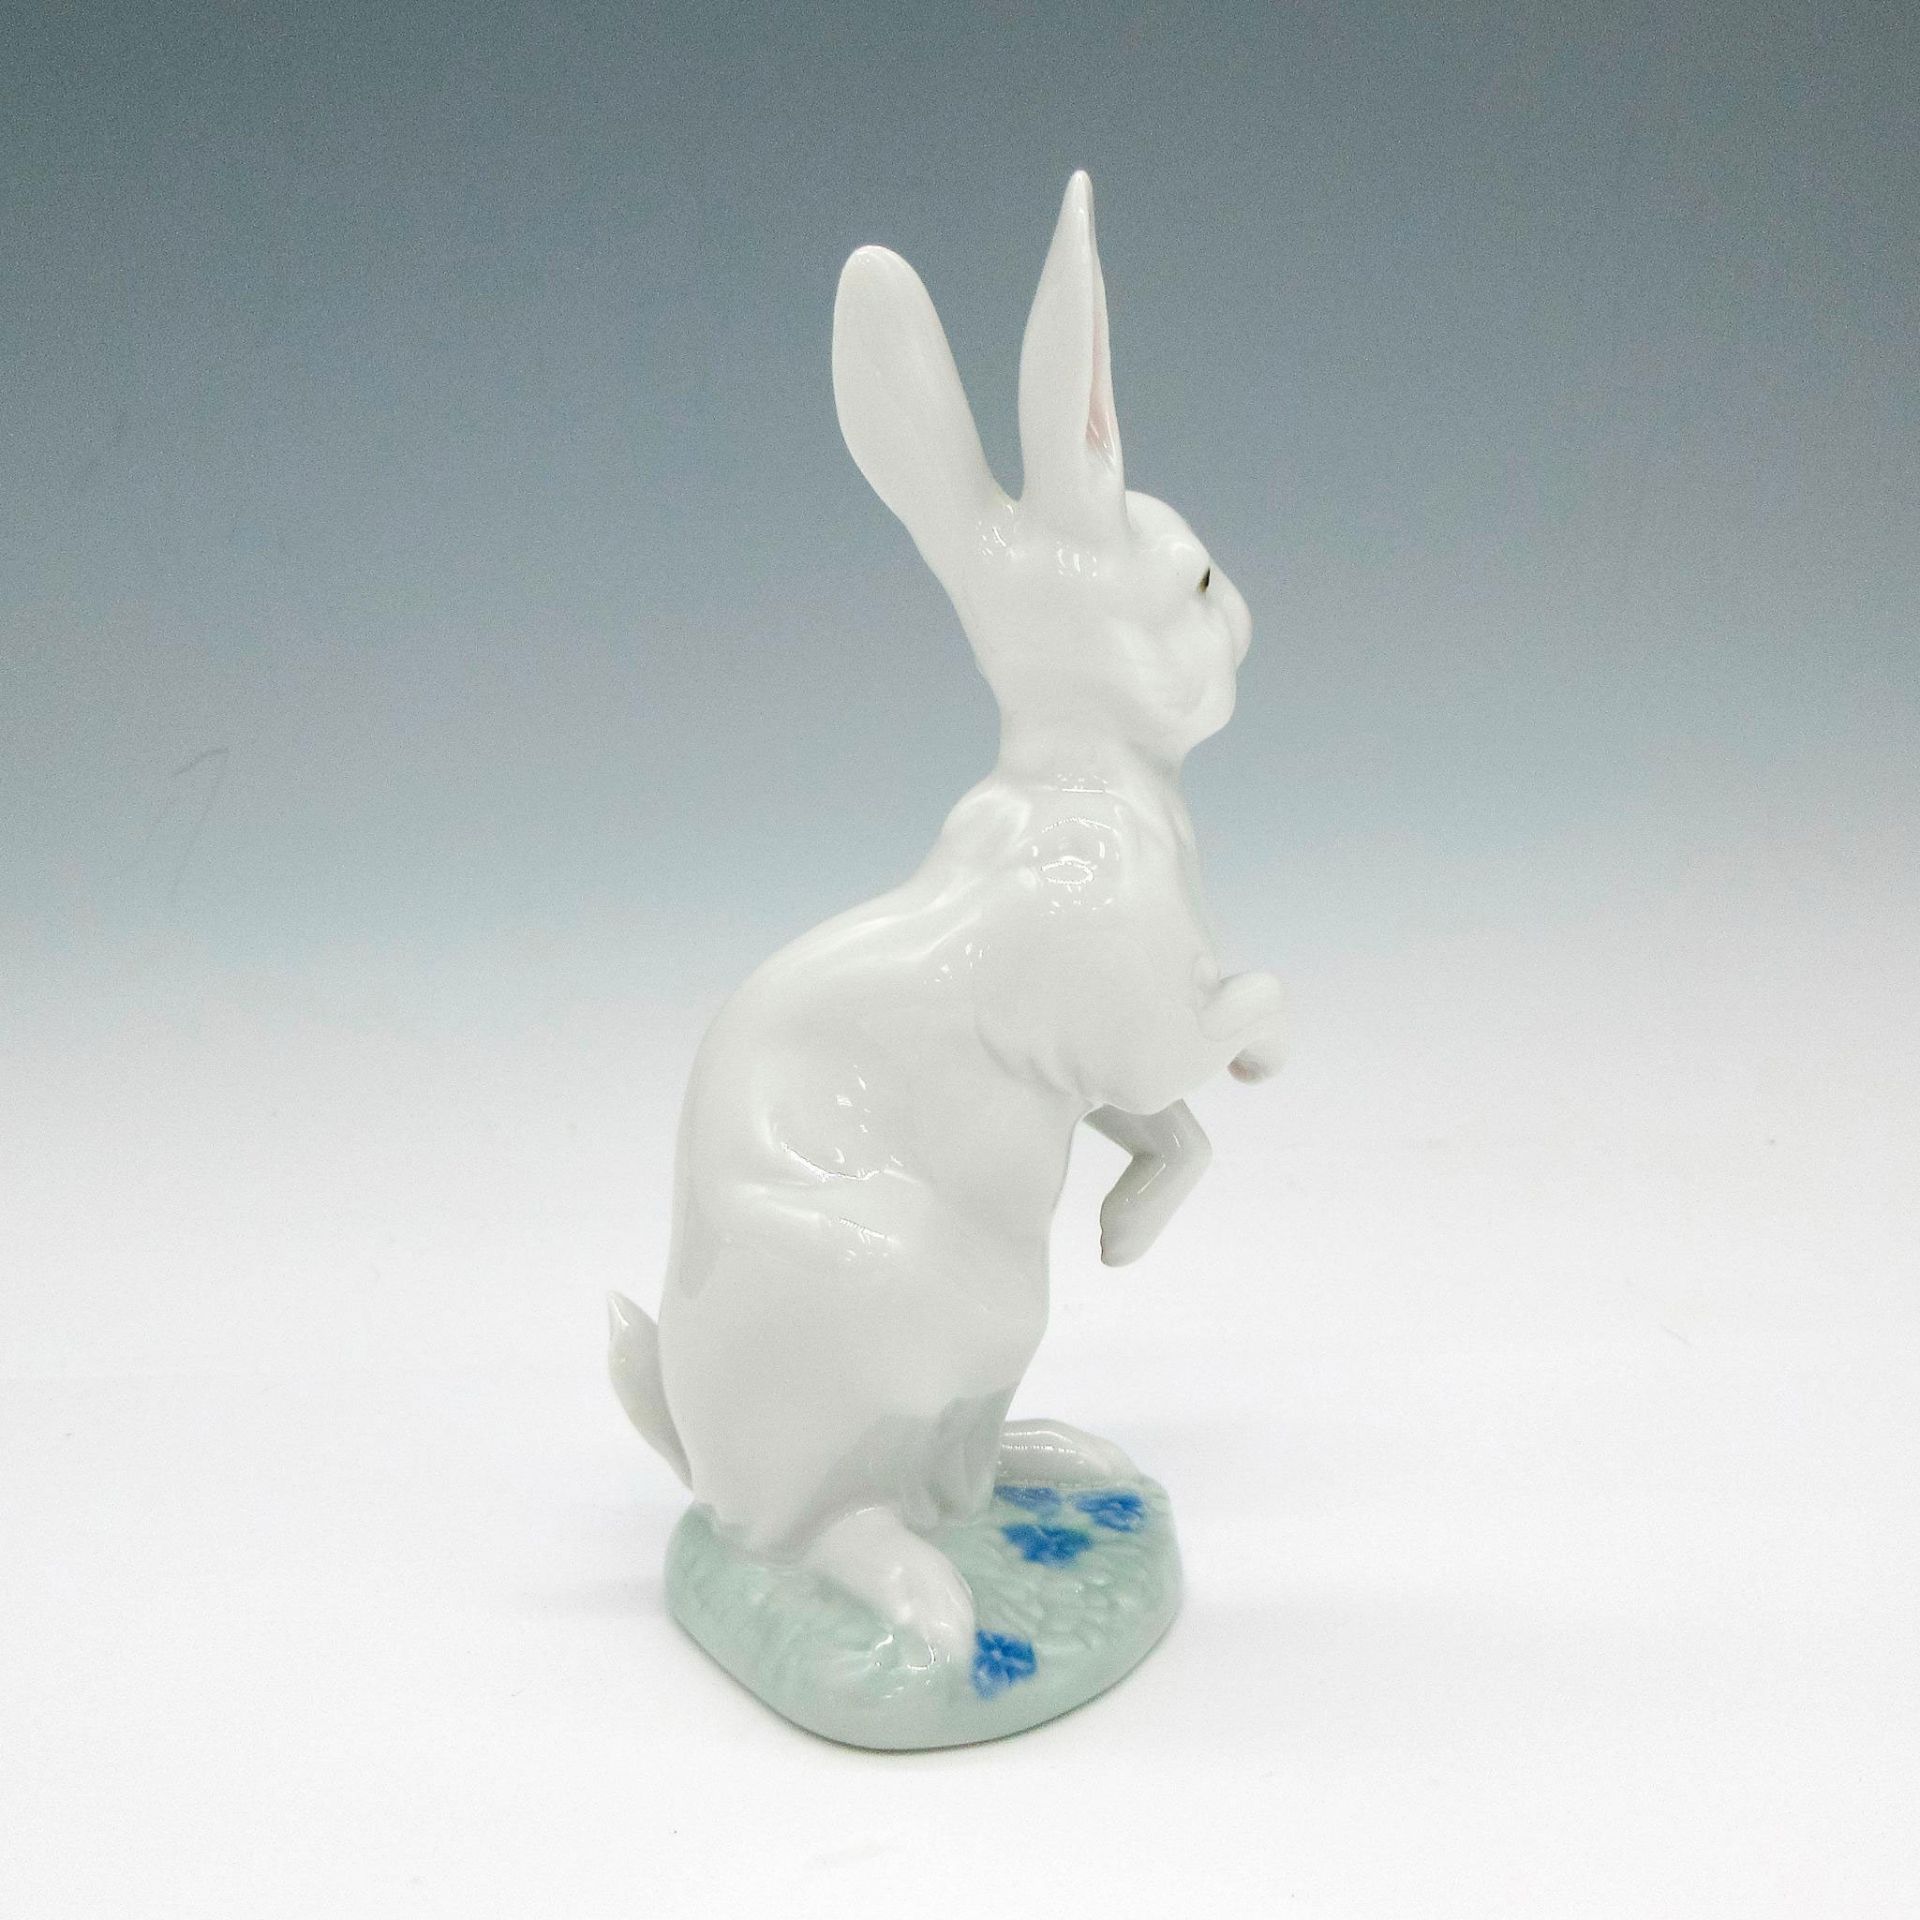 Hippity Hop 1005886 - Lladro Porcelain Figurine - Image 2 of 3